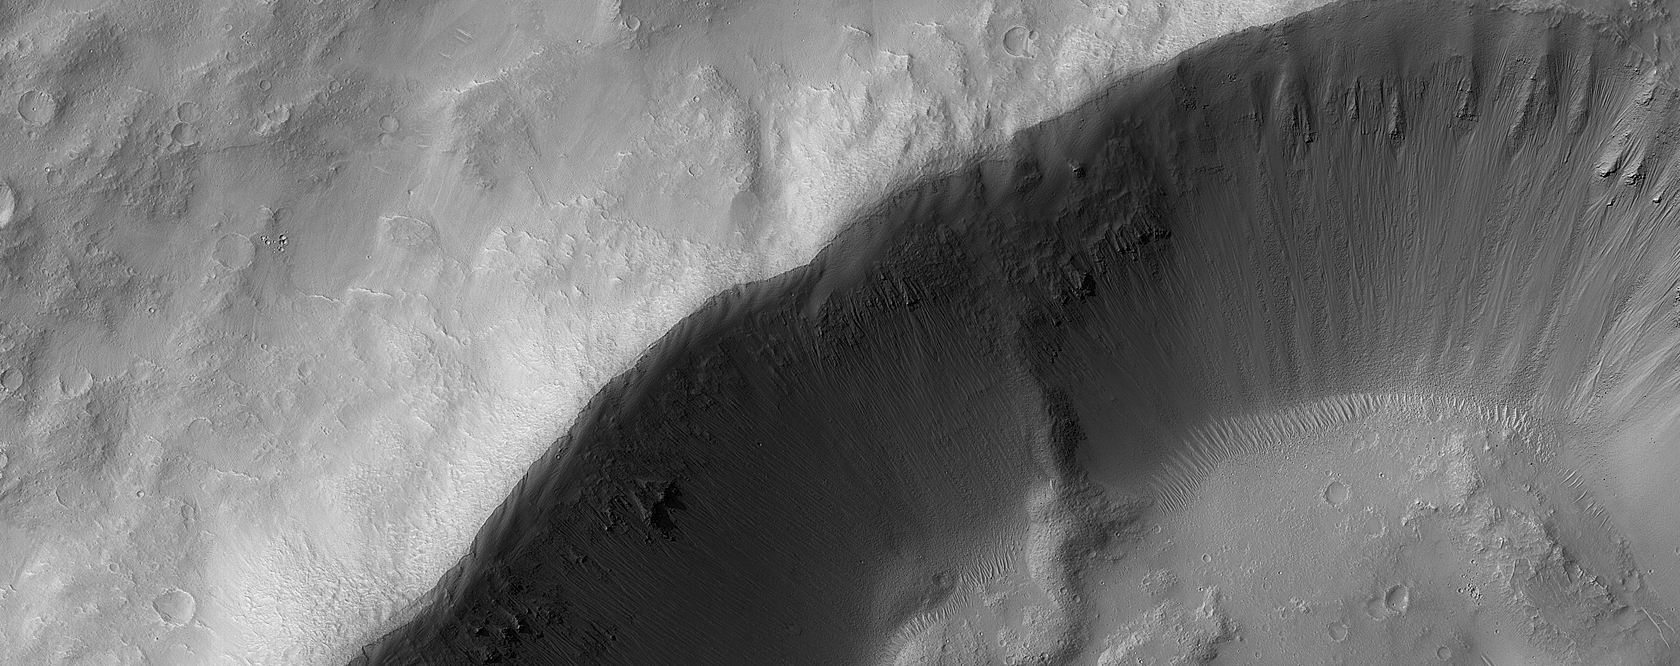 An Oblong Impact Crater in Terra Cimmeria